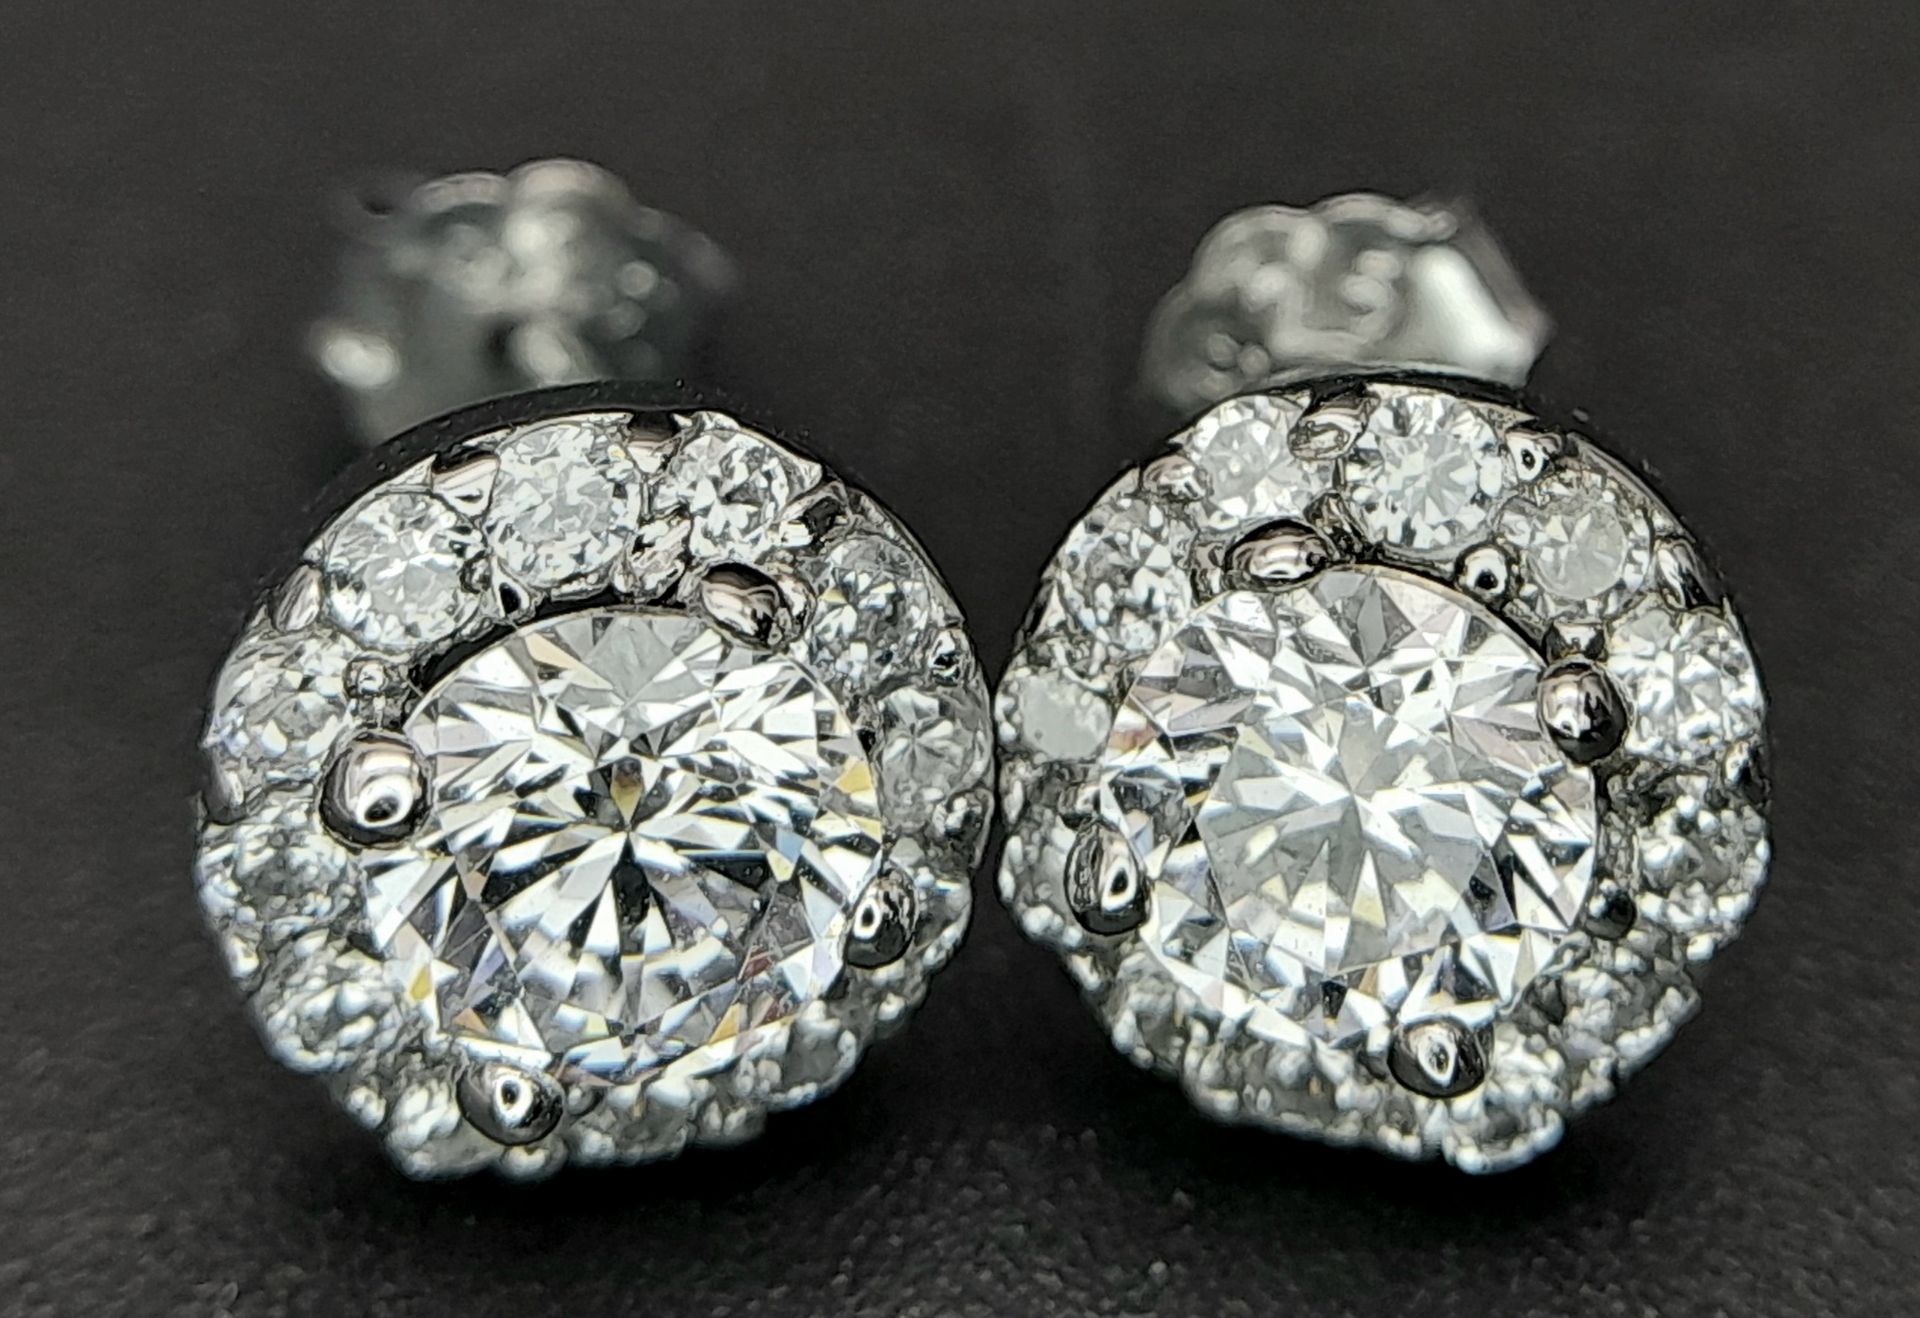 A Pair of 925 Silver White Zircon Stud Earrings.